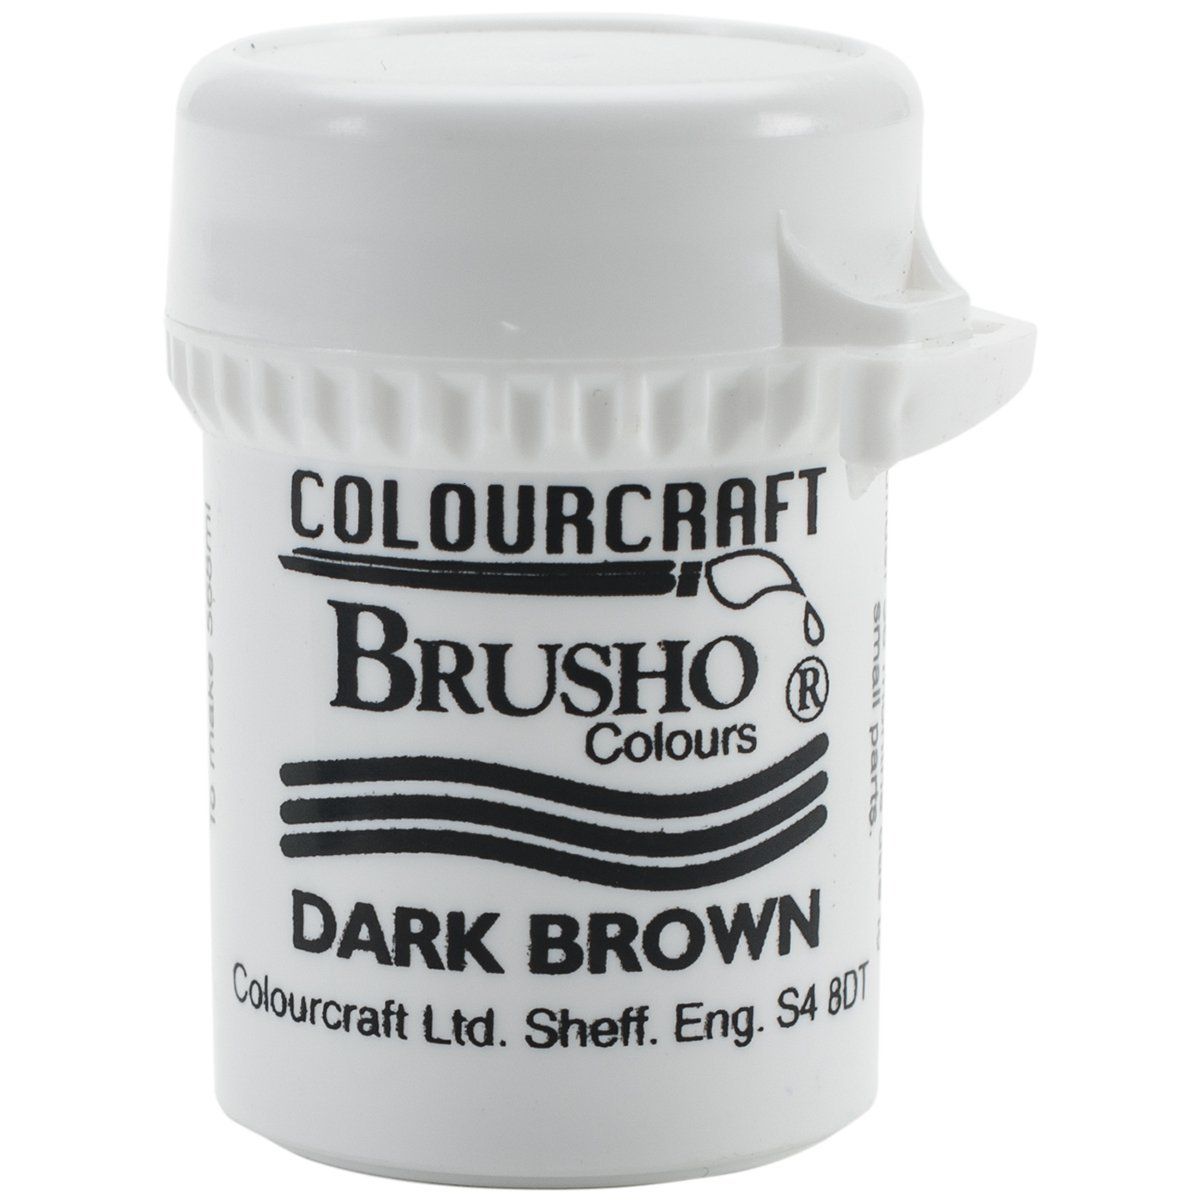 Brusho Crystal Colour - Dark Brown 15 gm